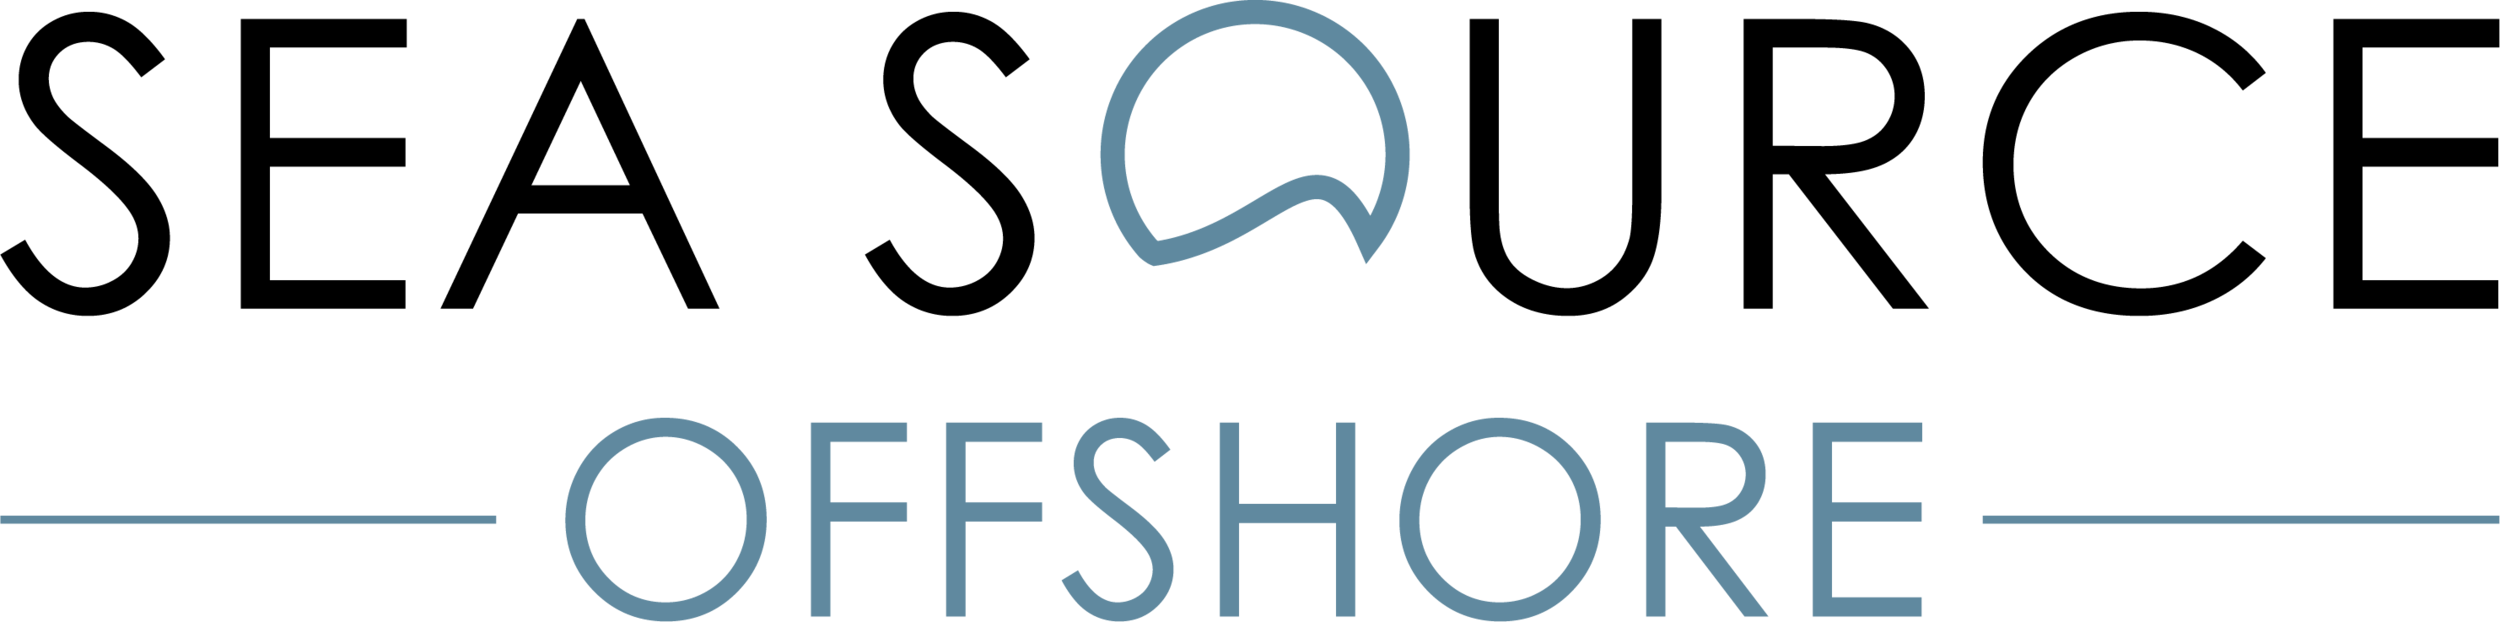 Logo de Sea Source Offshore.png